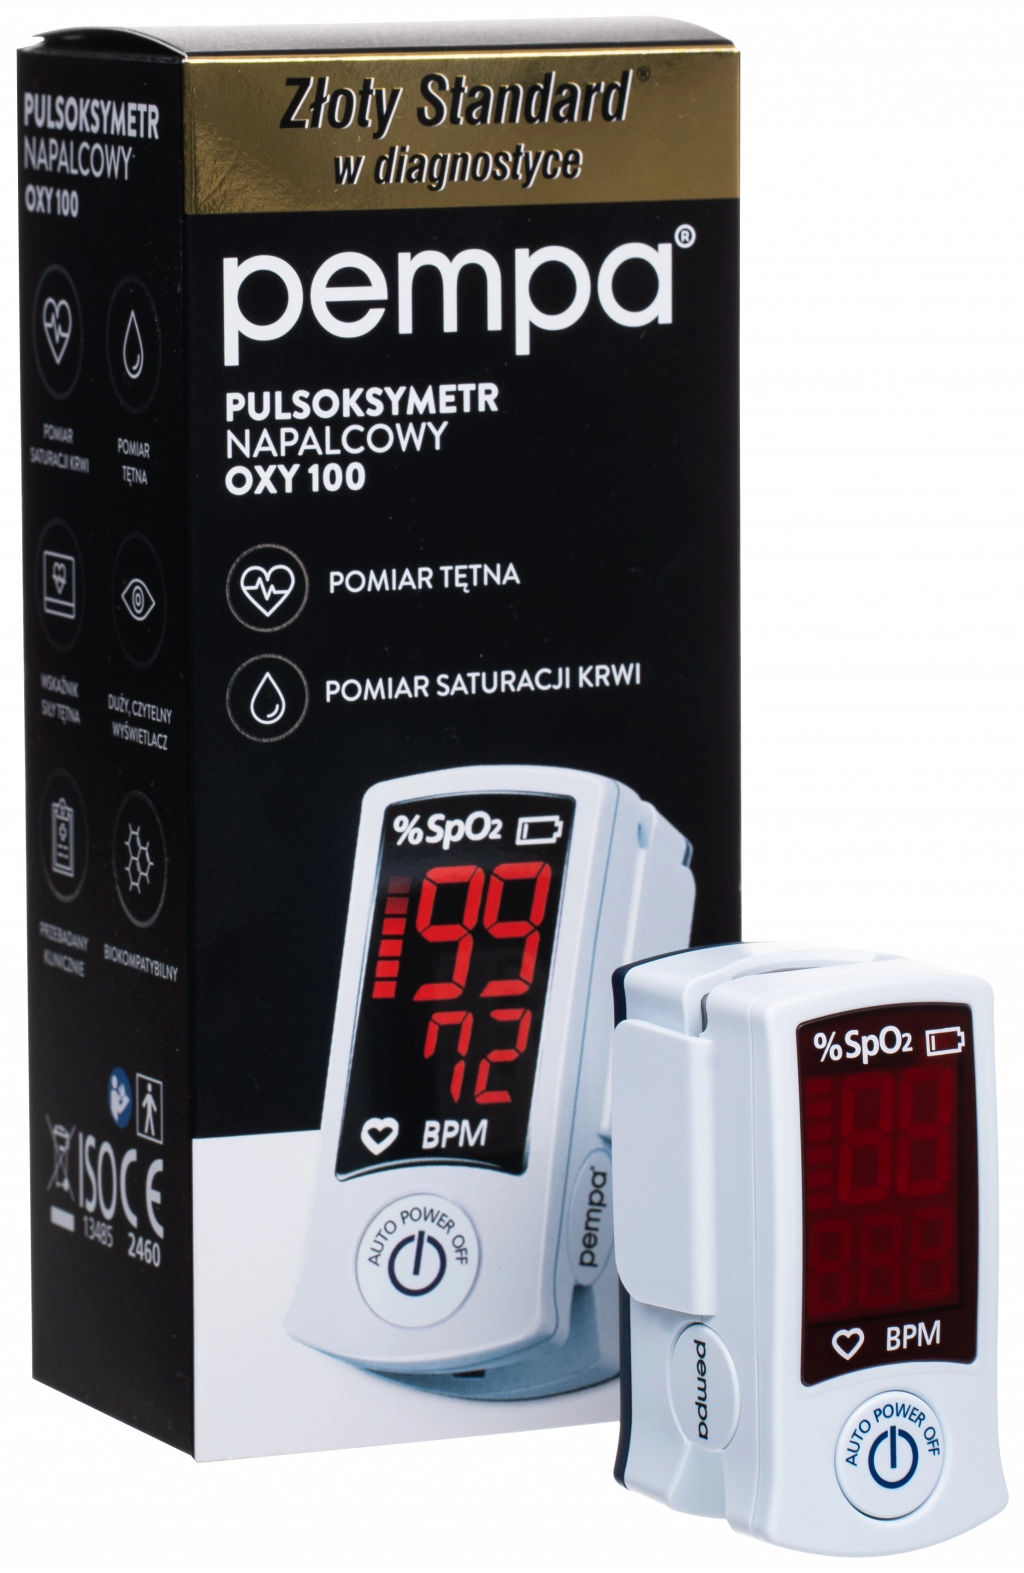 Pempa - Pulsoksymetr napalcowy OXY 100